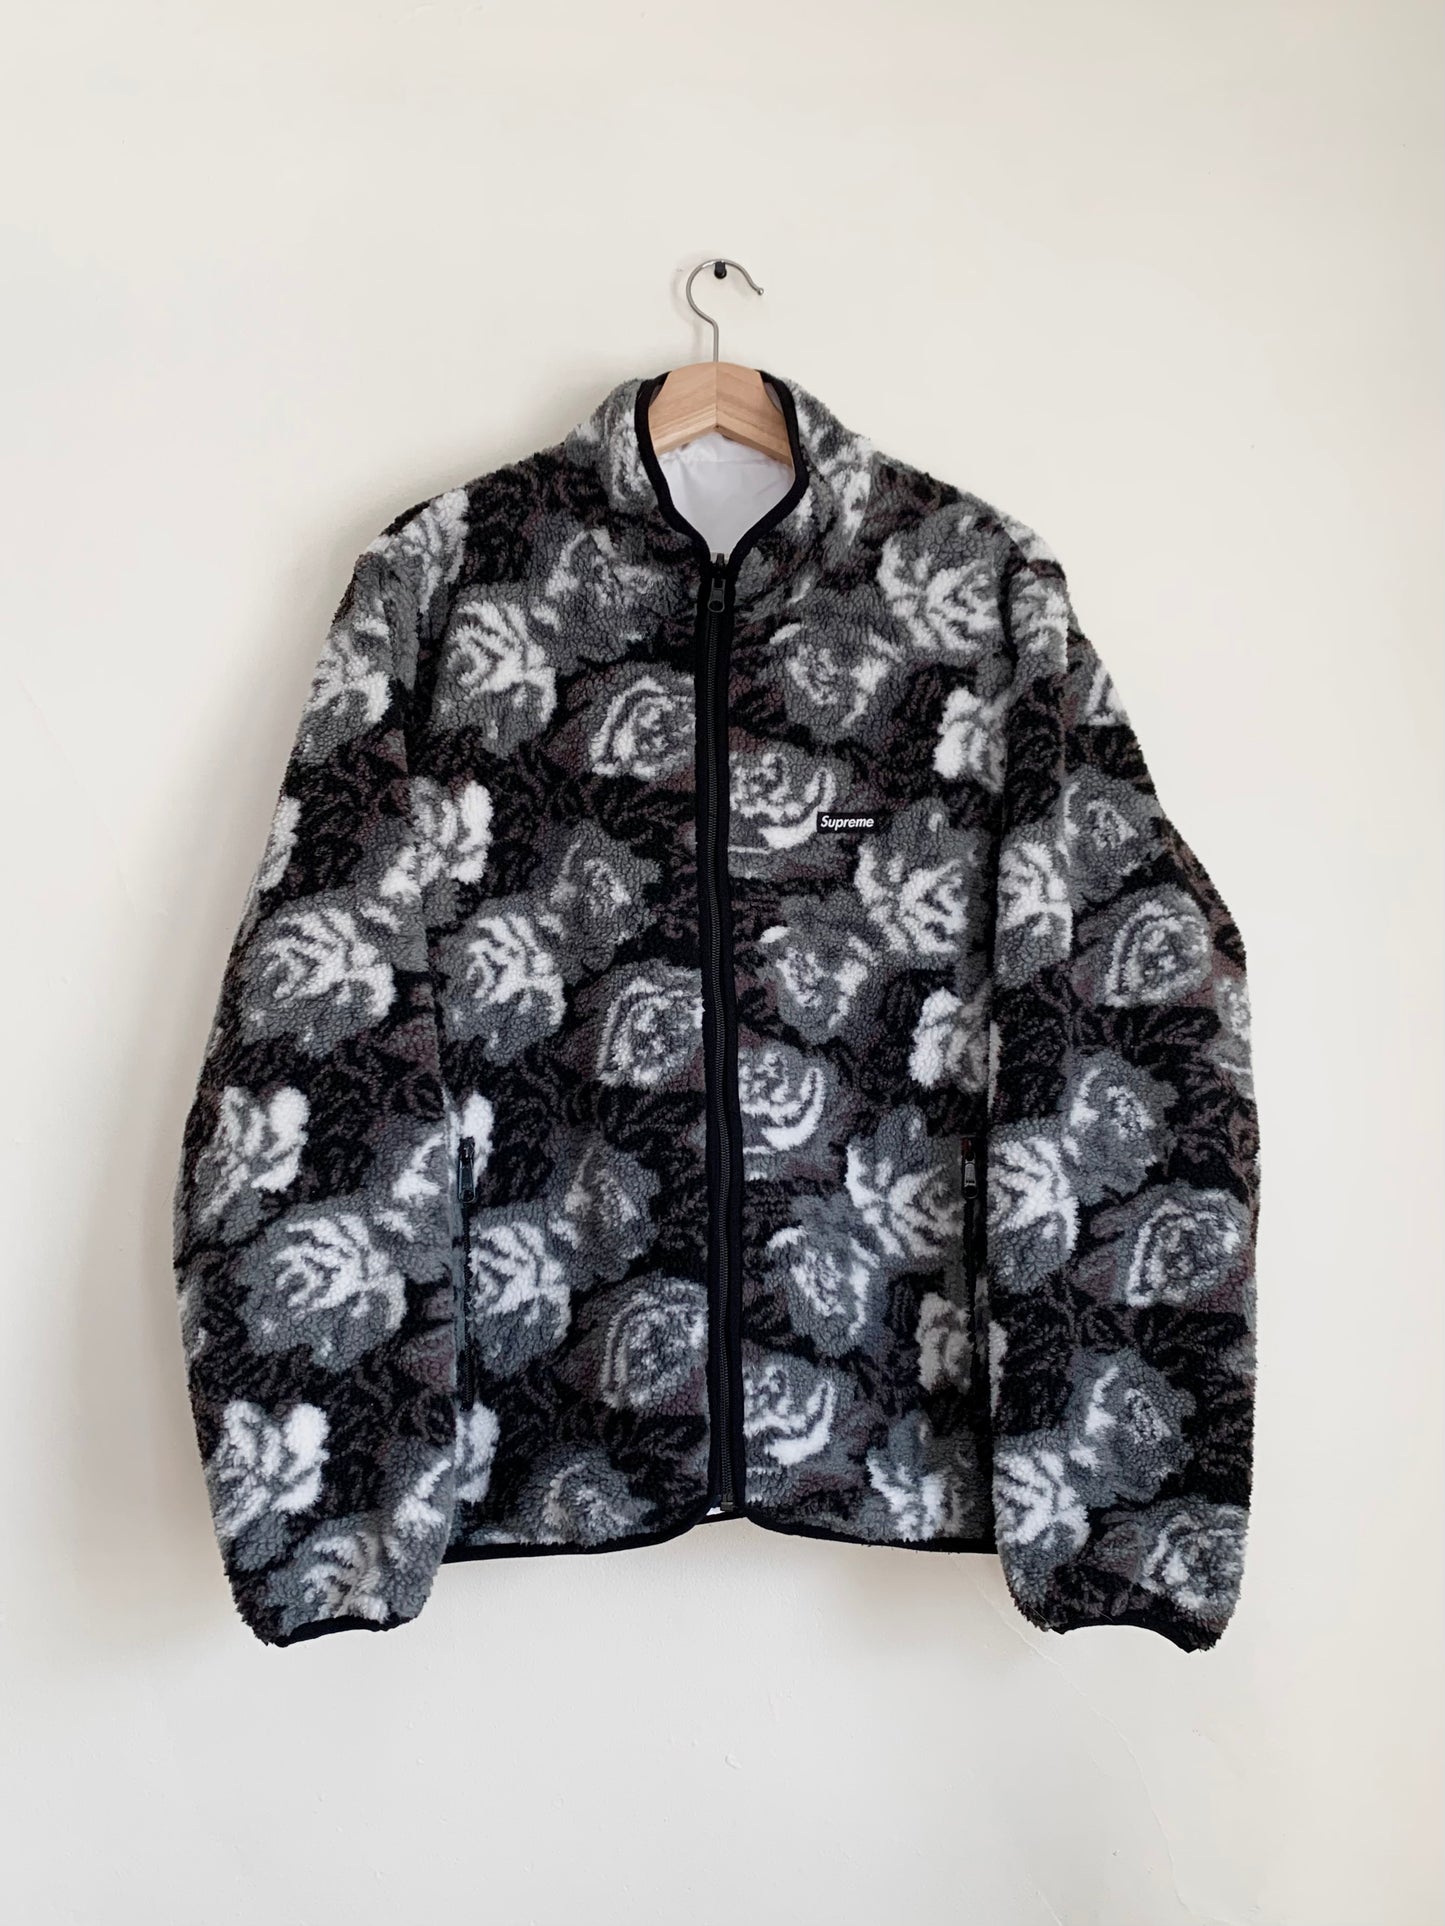 RUSHOLME - Supreme Roses Sherpa Reversible Fleece Jacket (FW16